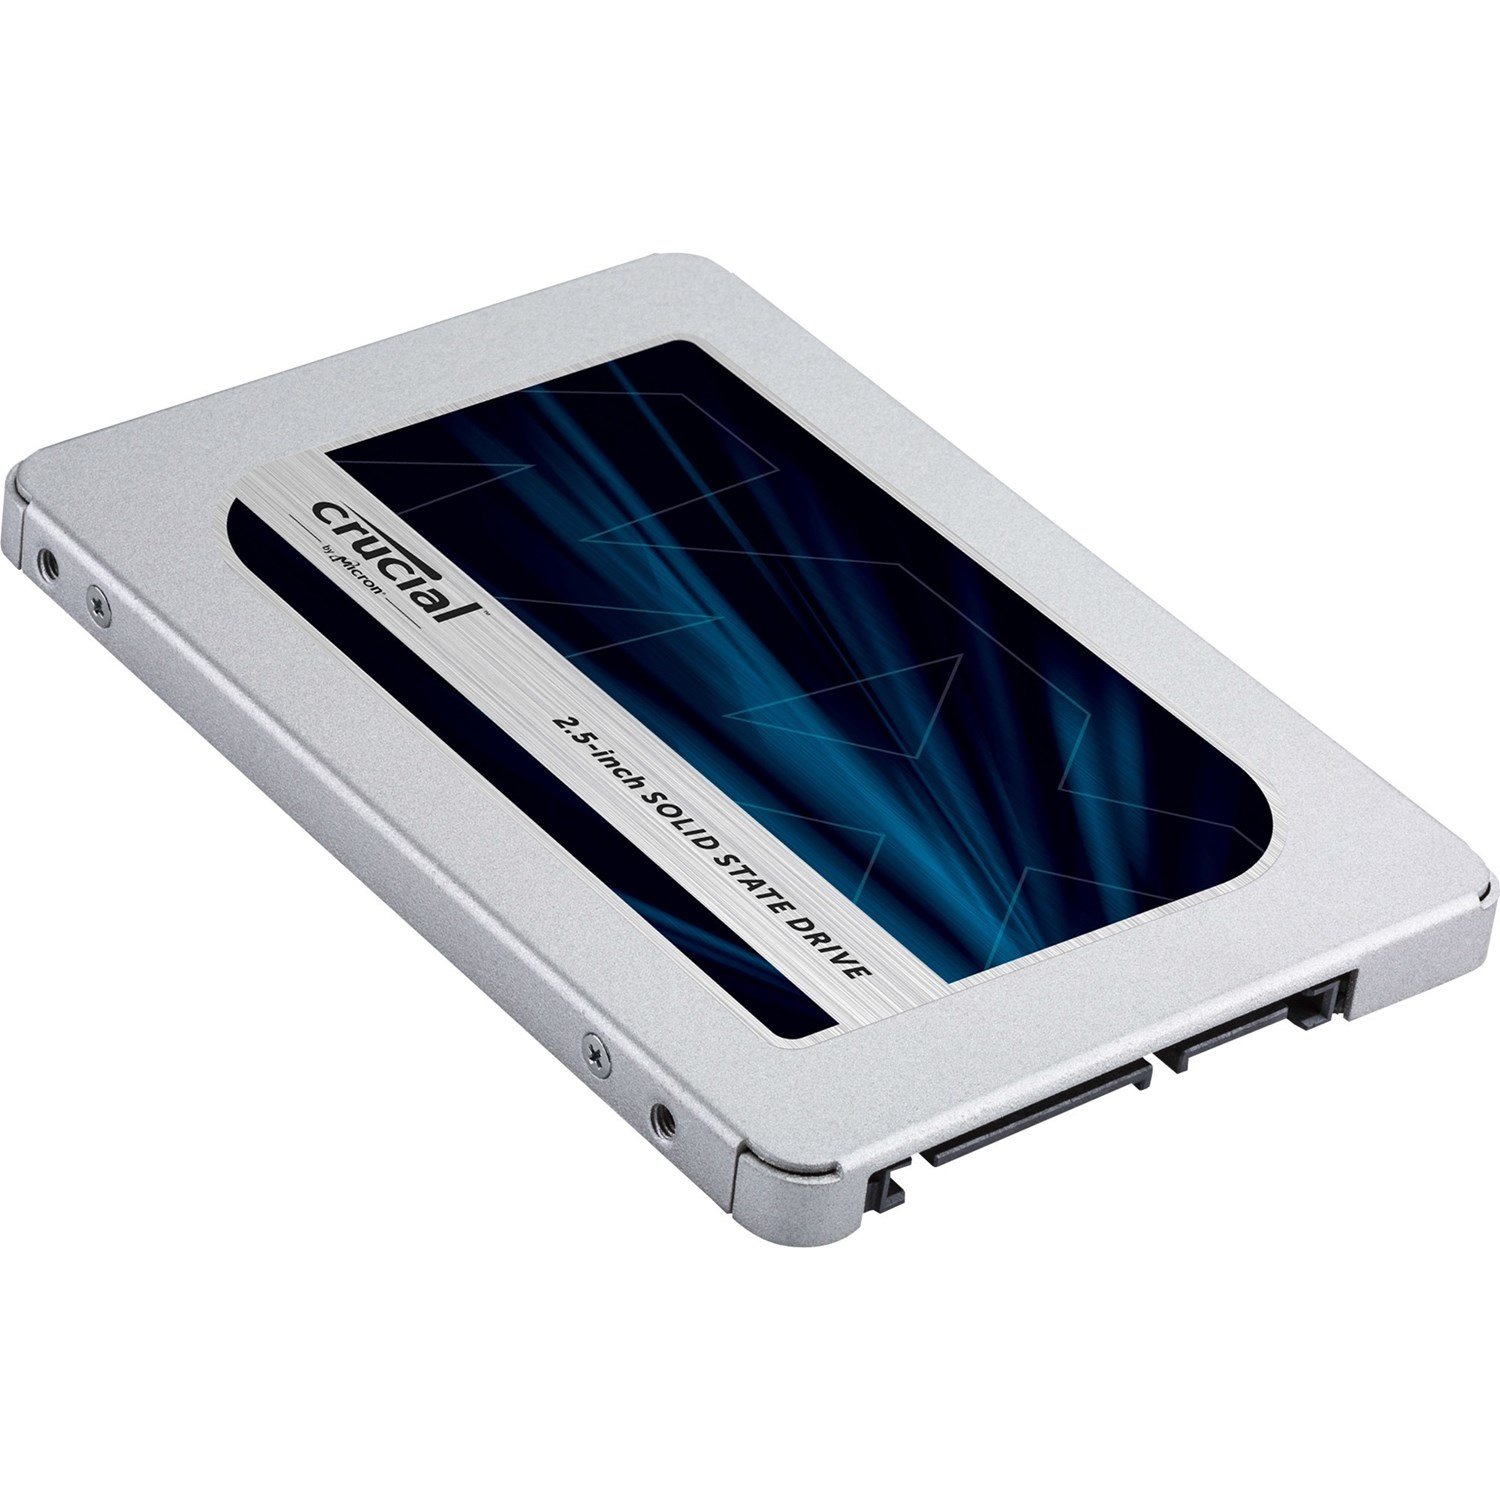 Crucial MX500 250GB 2.5' Sata SSD - 3D TLC 560/510 MB/s 90/95K Iops Acronis True Image Cloning Software 5YR WTY 7MM W/9.5MM Adapter ~Hbk-Suv500-240G